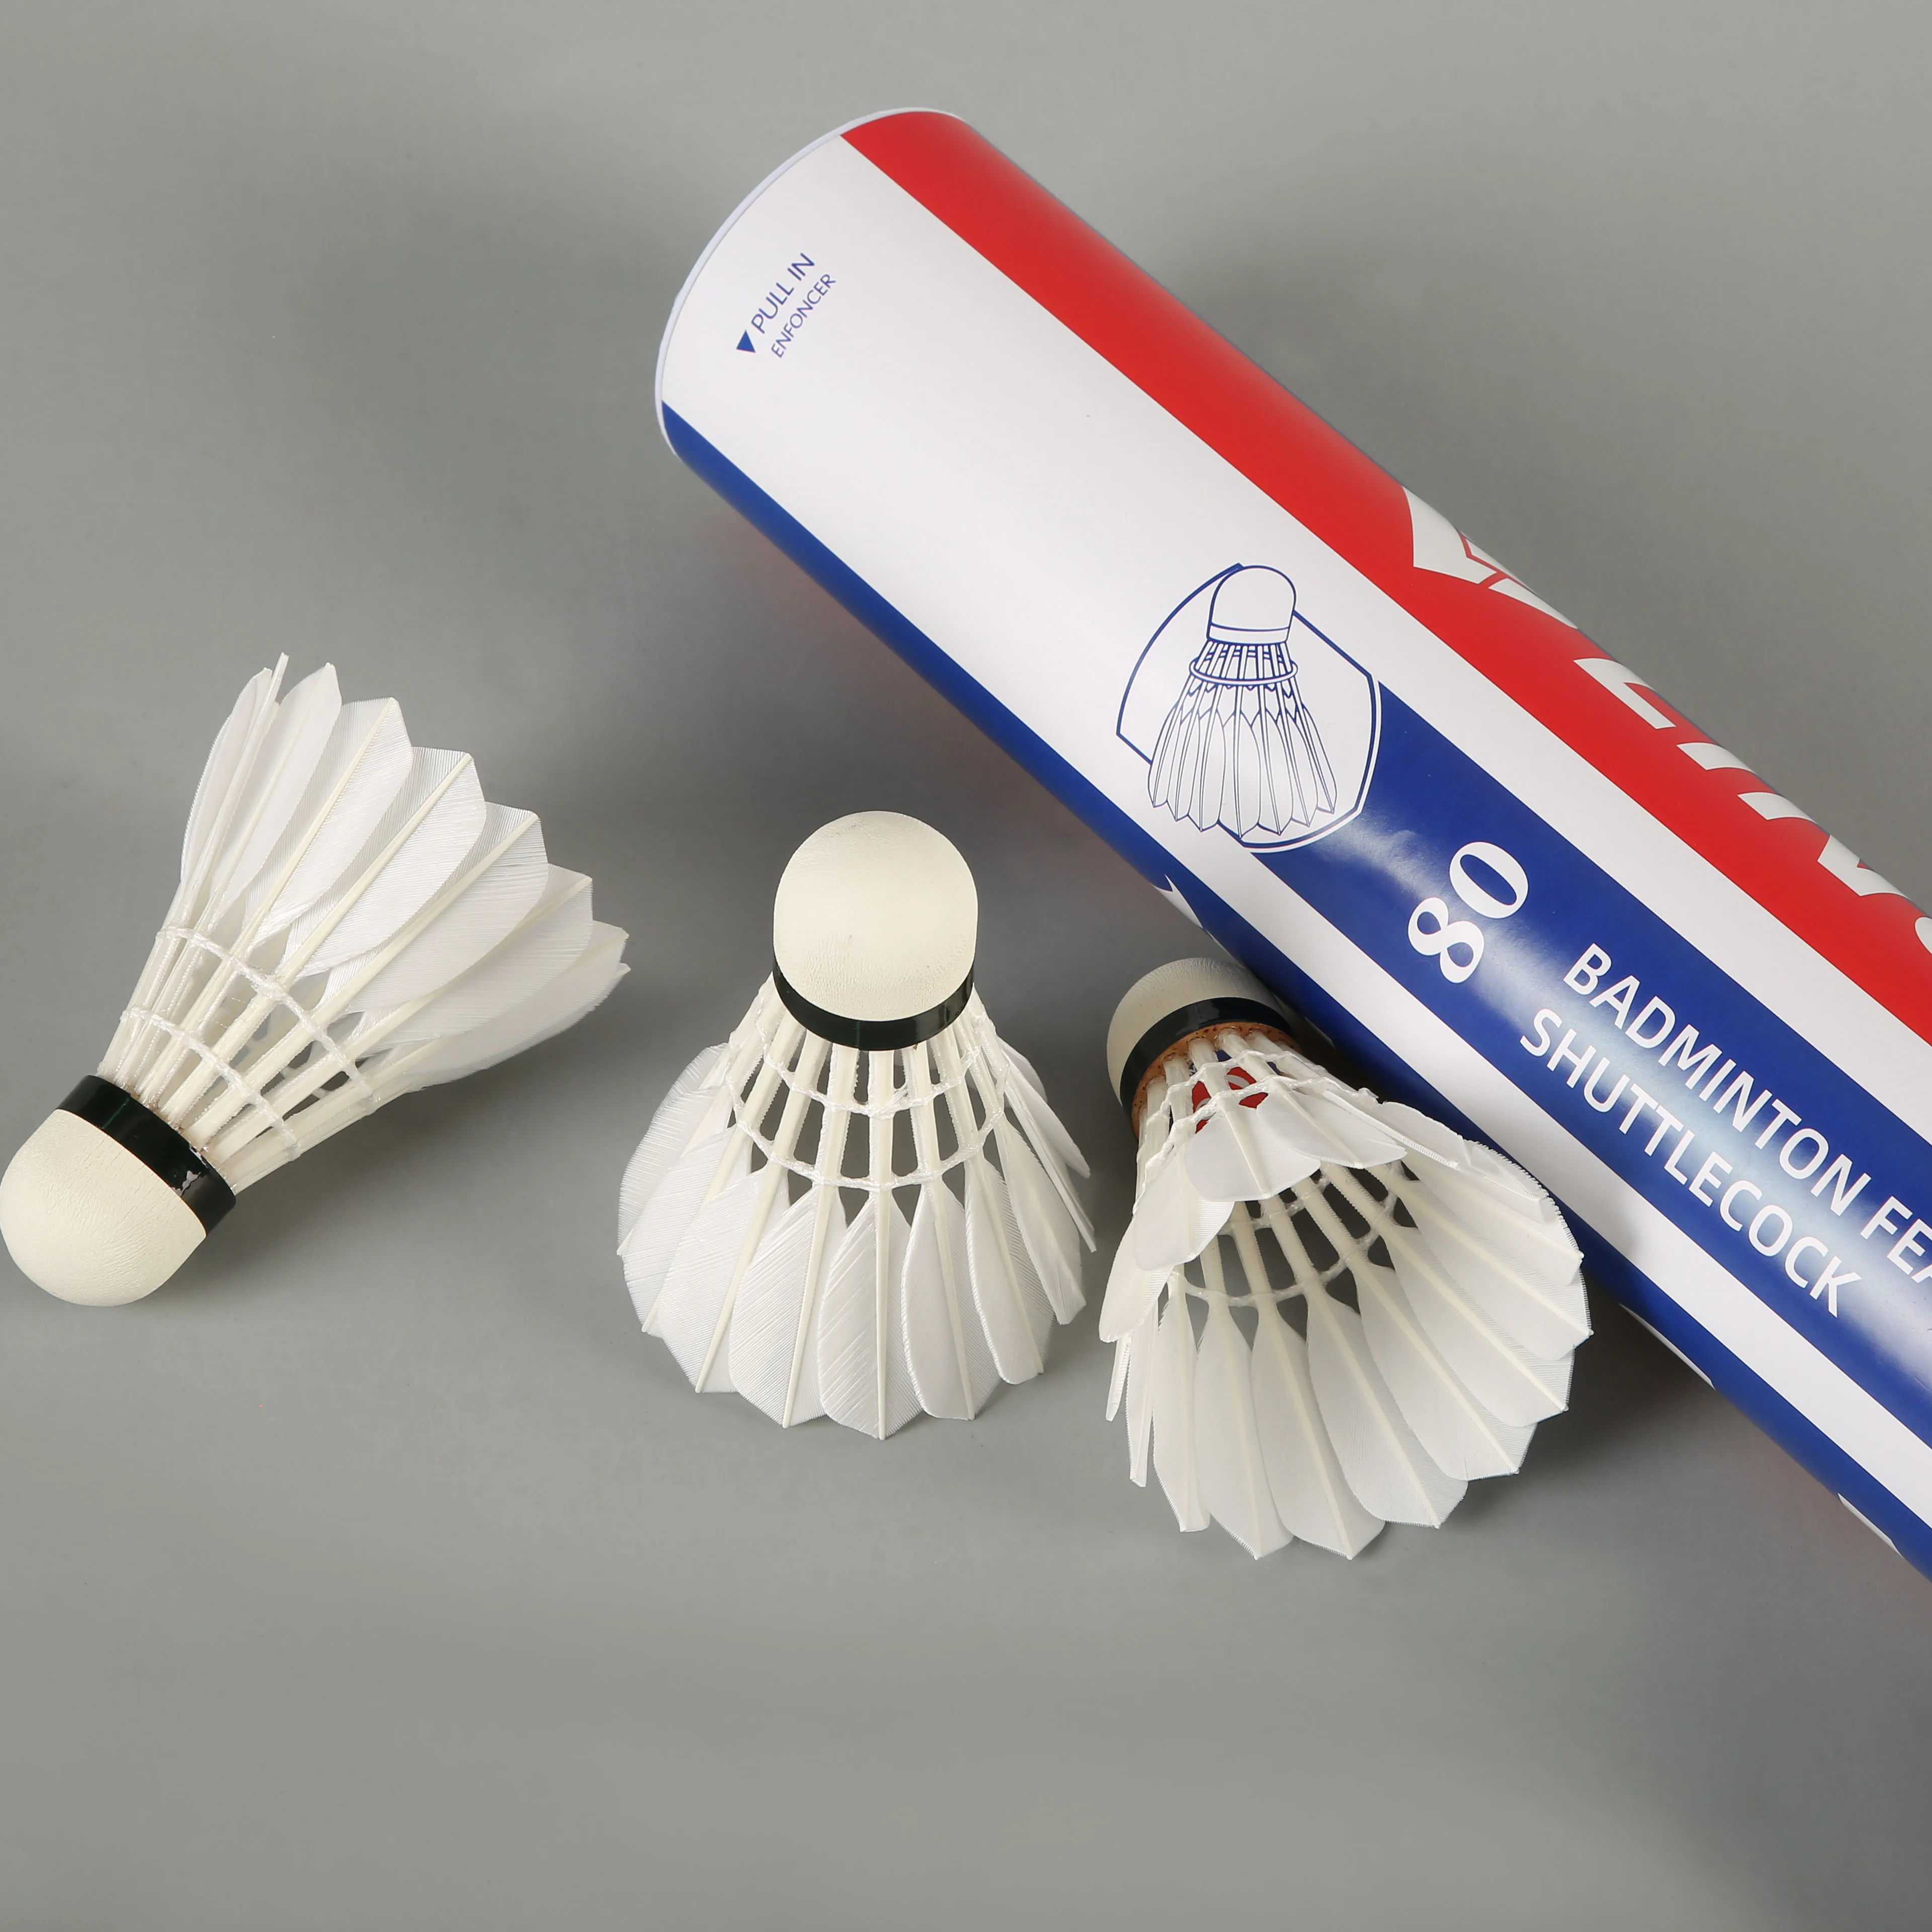 

LINGMEI 80 class 1 durable goose feather brand badminton shuttlecock for international tournament, White